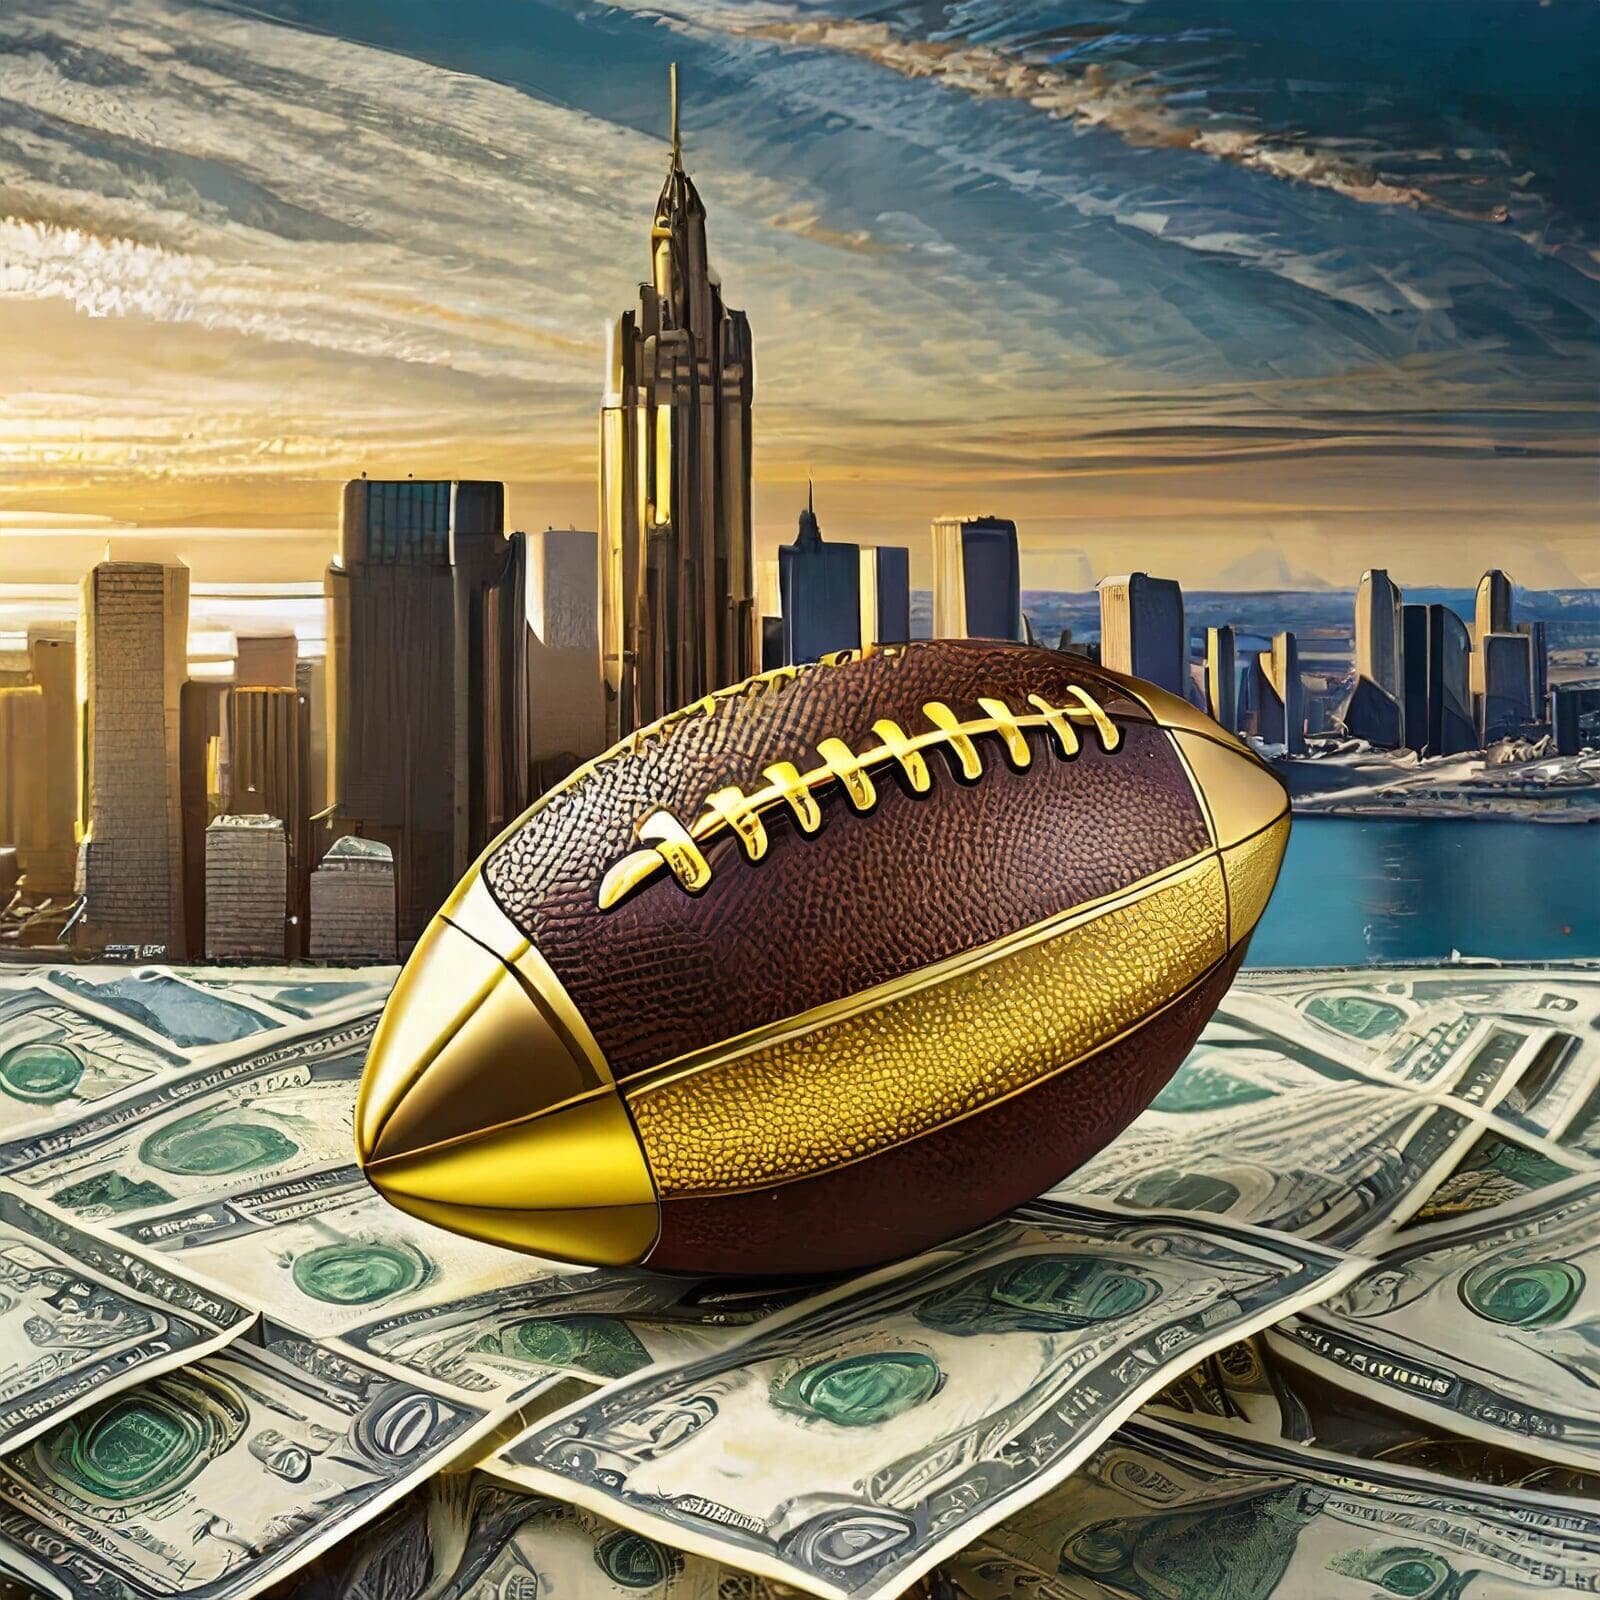 $160 M In Economic Impact Estimated For NFL Draft